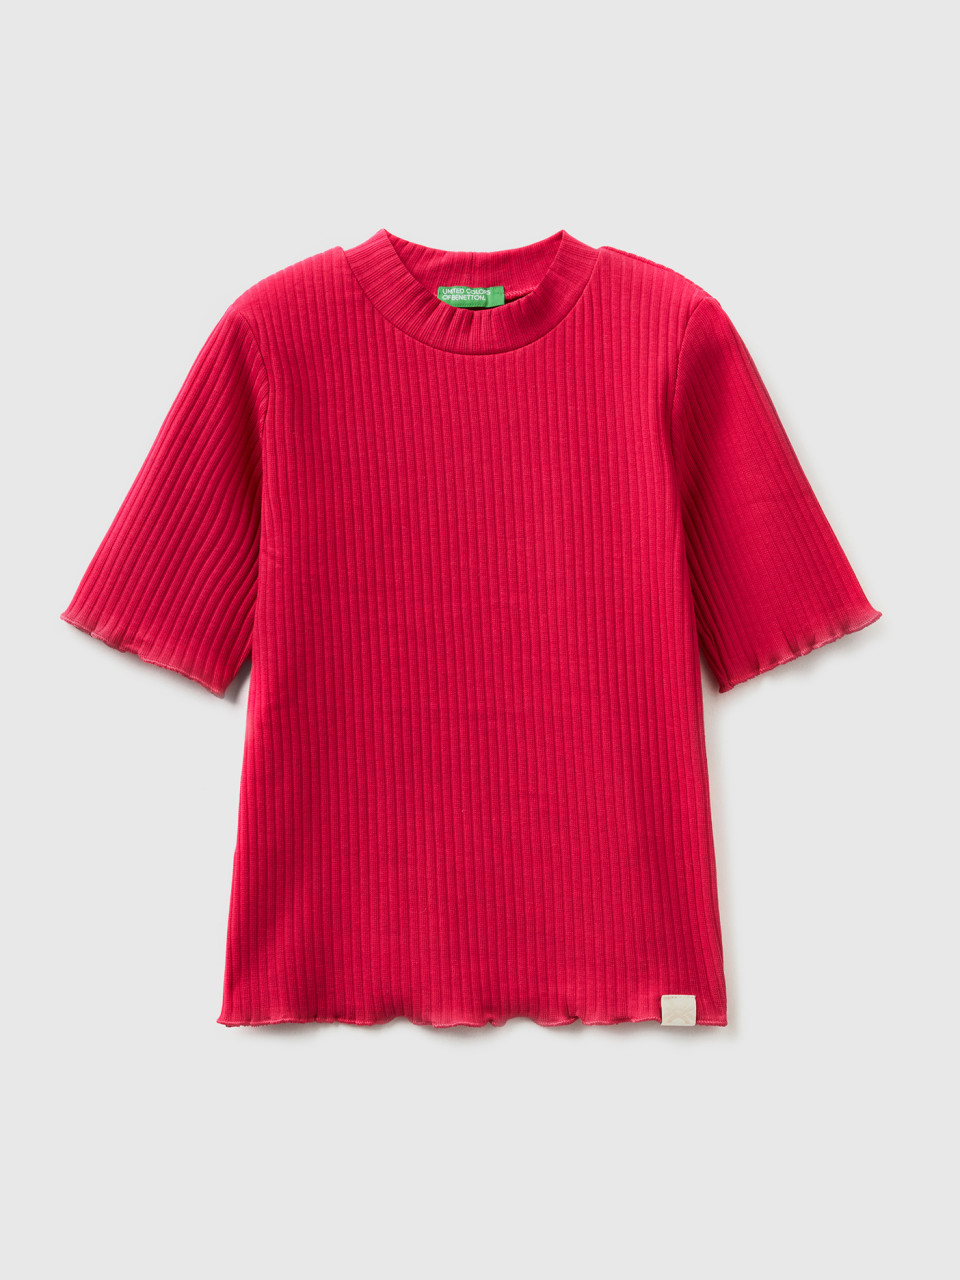 Benetton, Short Sleeve Turtleneck T-shirt, Cyclamen, Kids